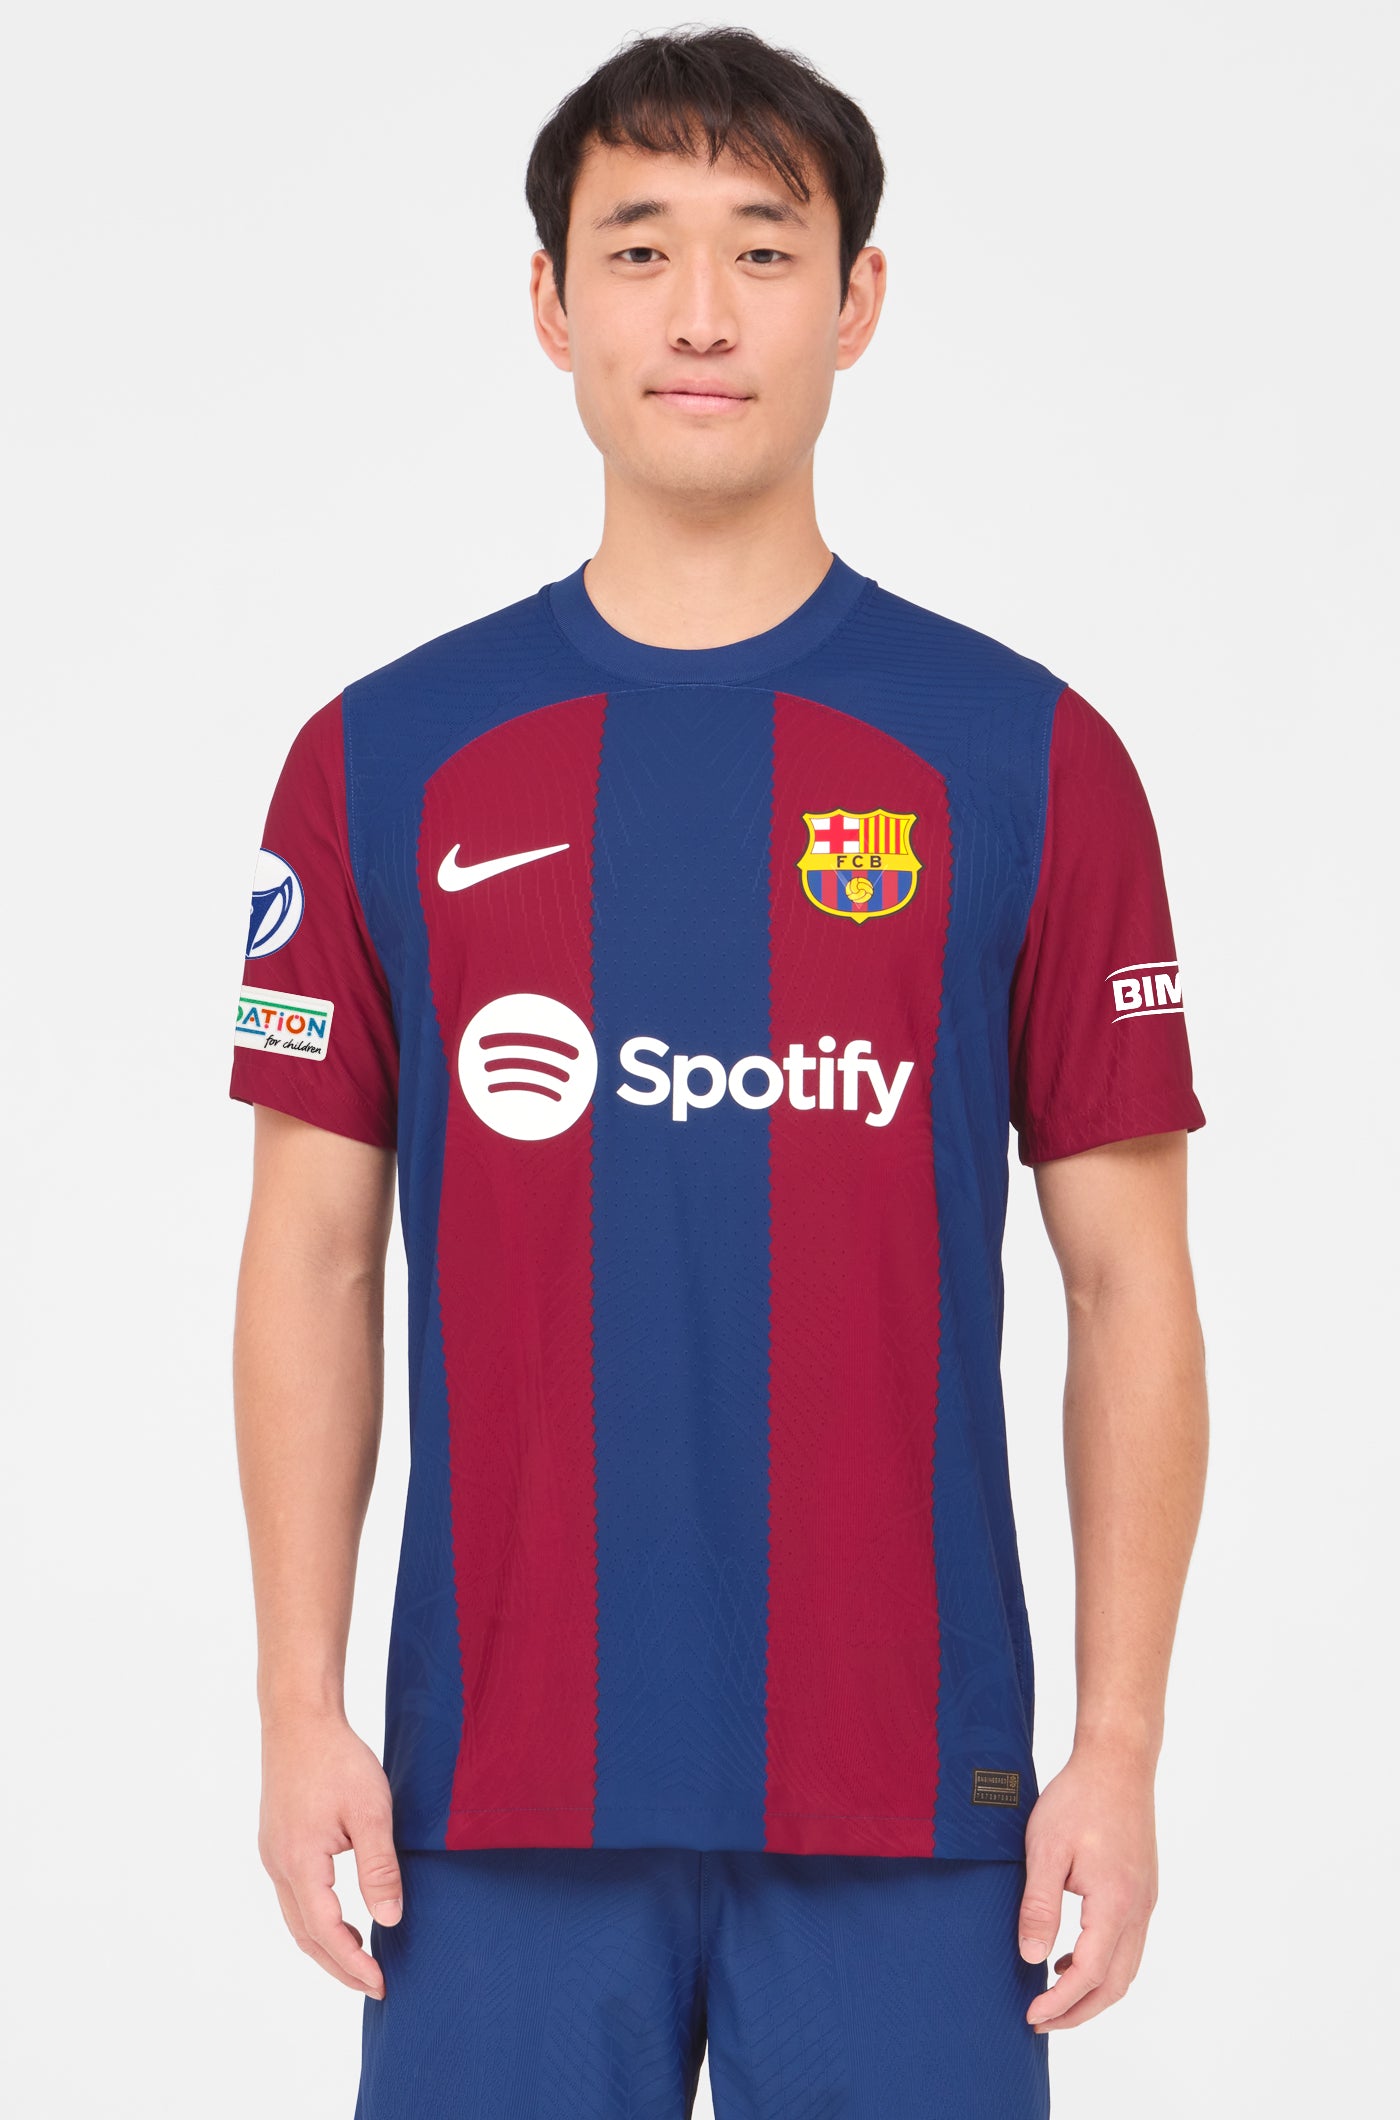 UWCL FC Barcelona home shirt 23/24 Player's Edition  - GRAHAM